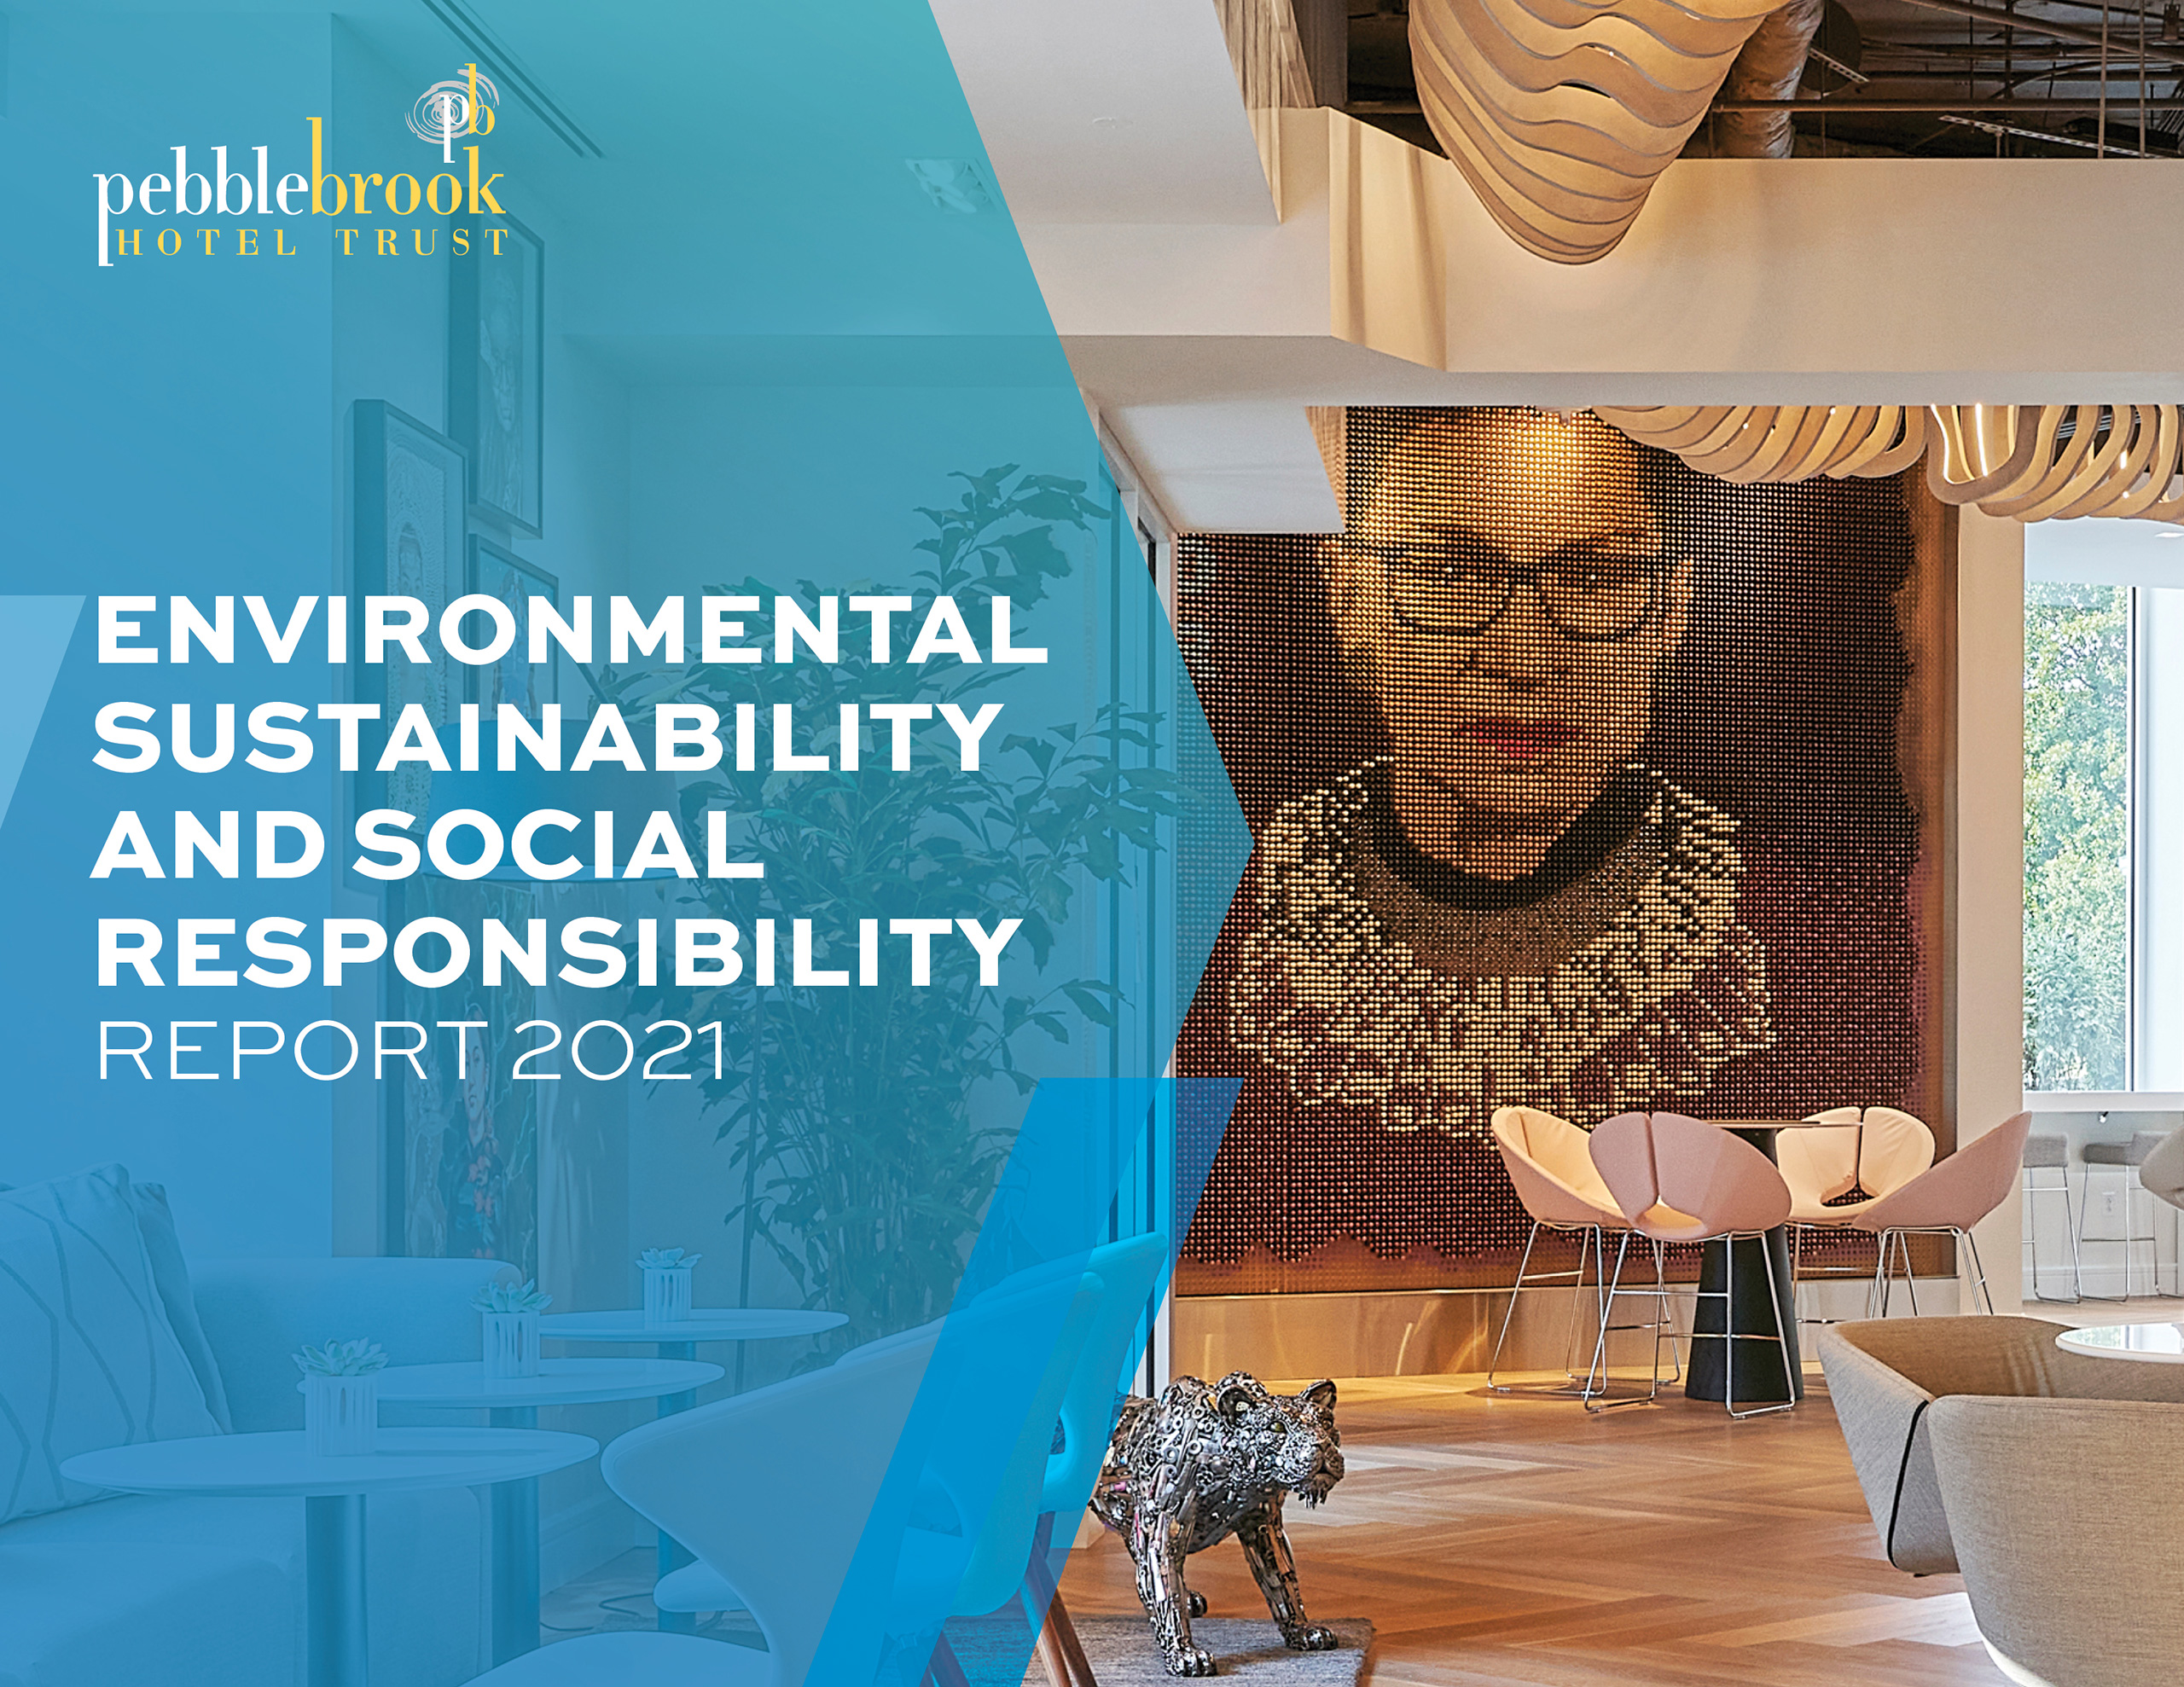 Pebblebrook Hotel Trust 2021 Environmental Sustainability & Social Responsibility Report